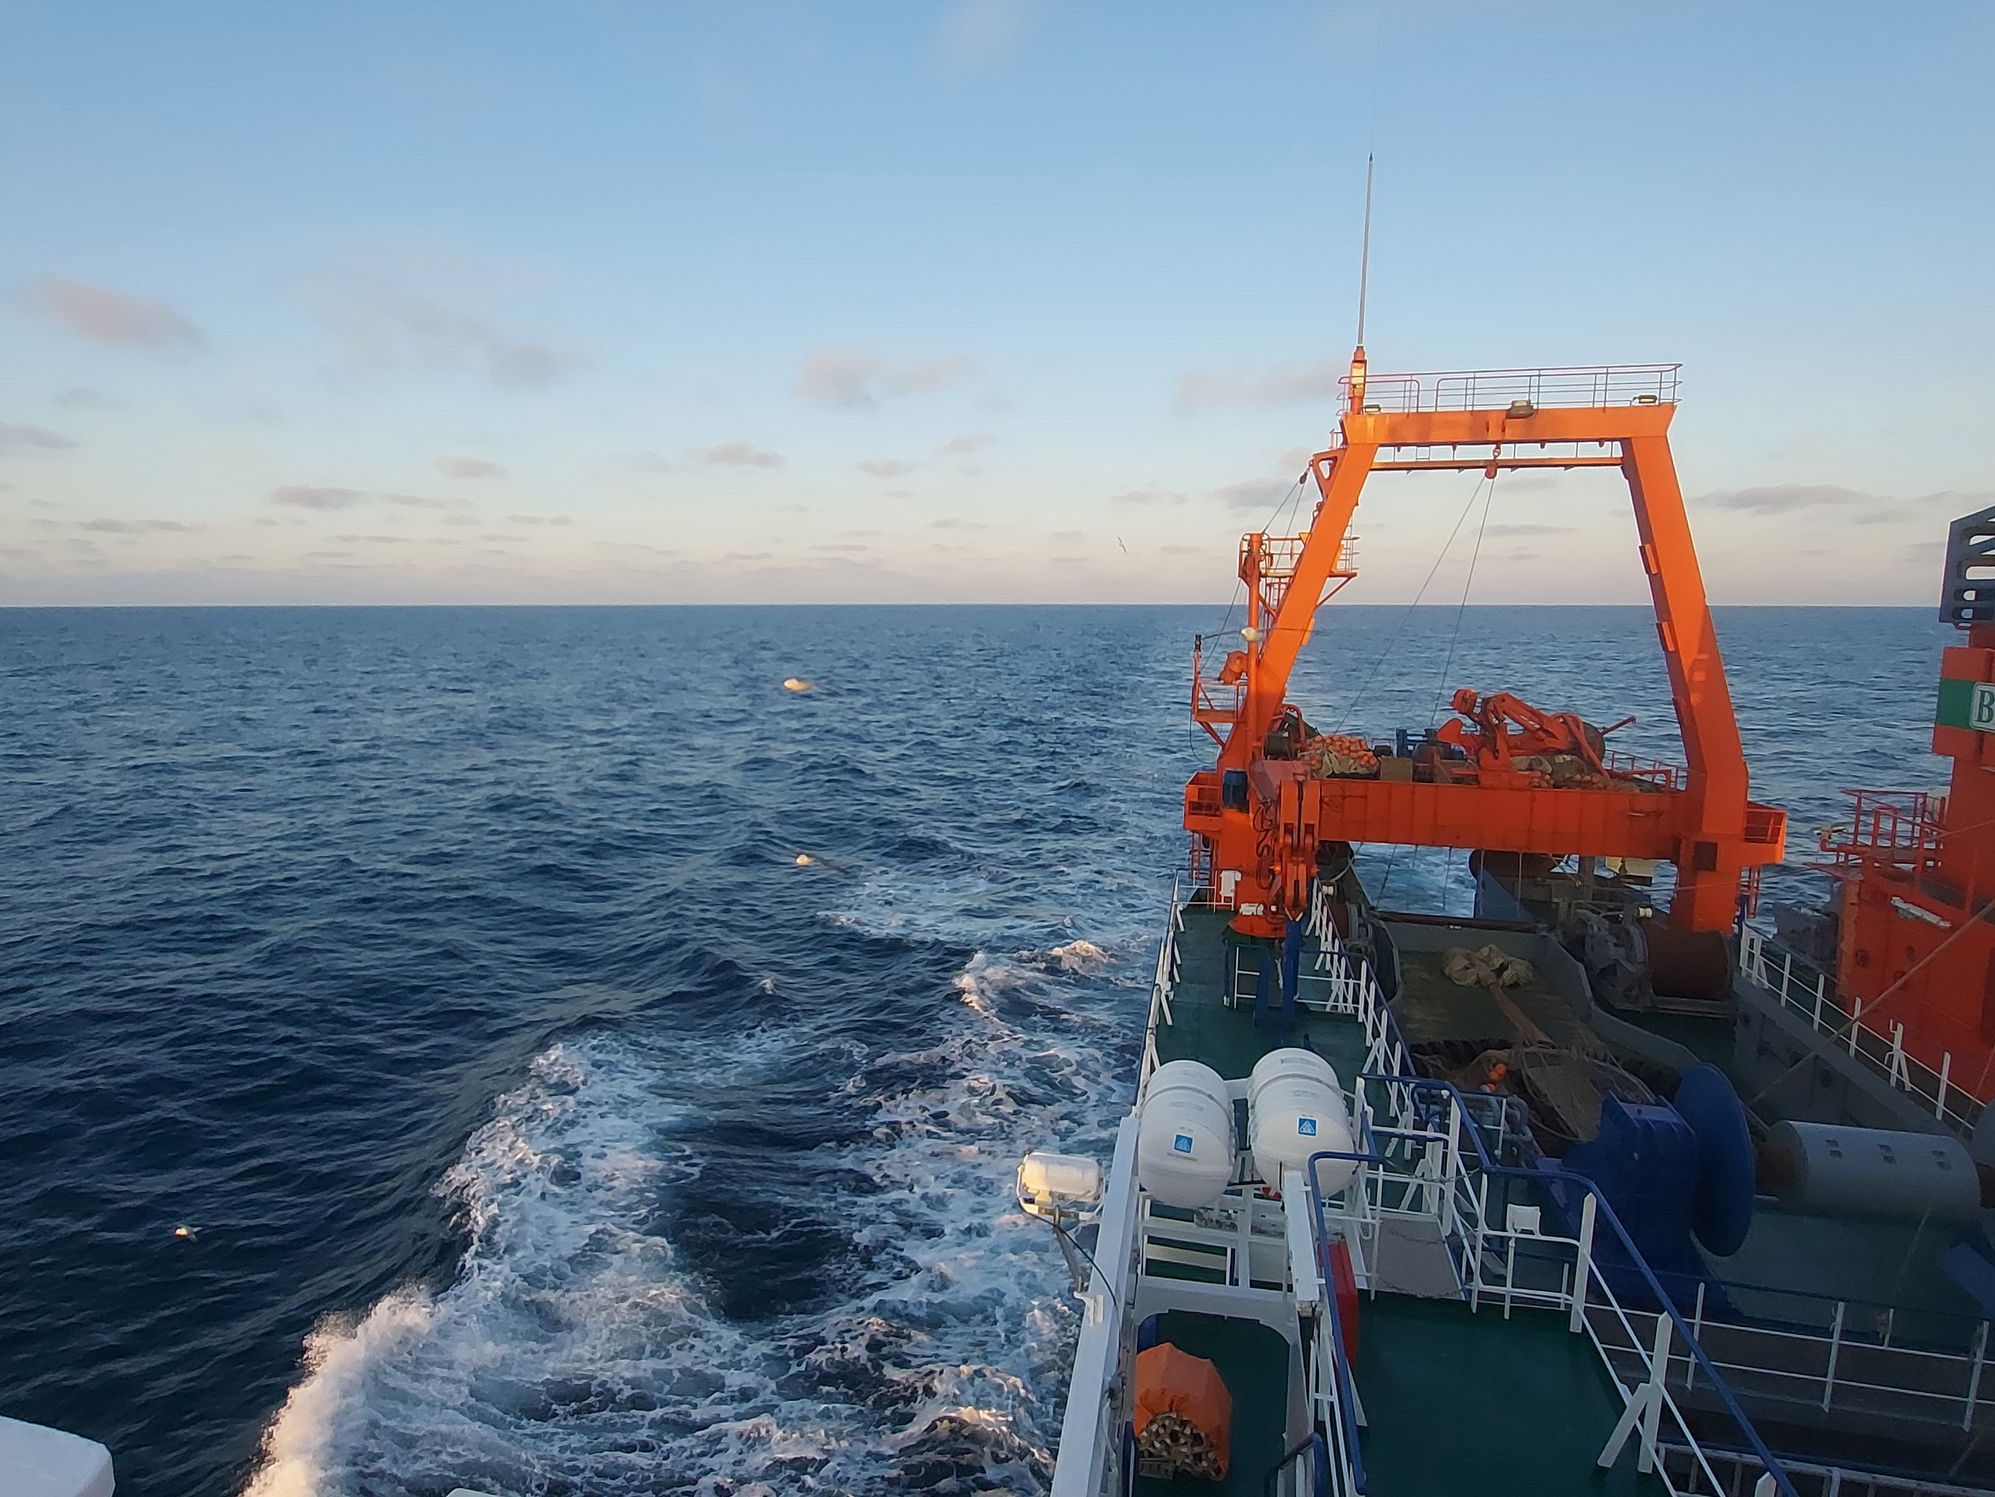 Blick vom Forschungsschiff aufs offene Meer